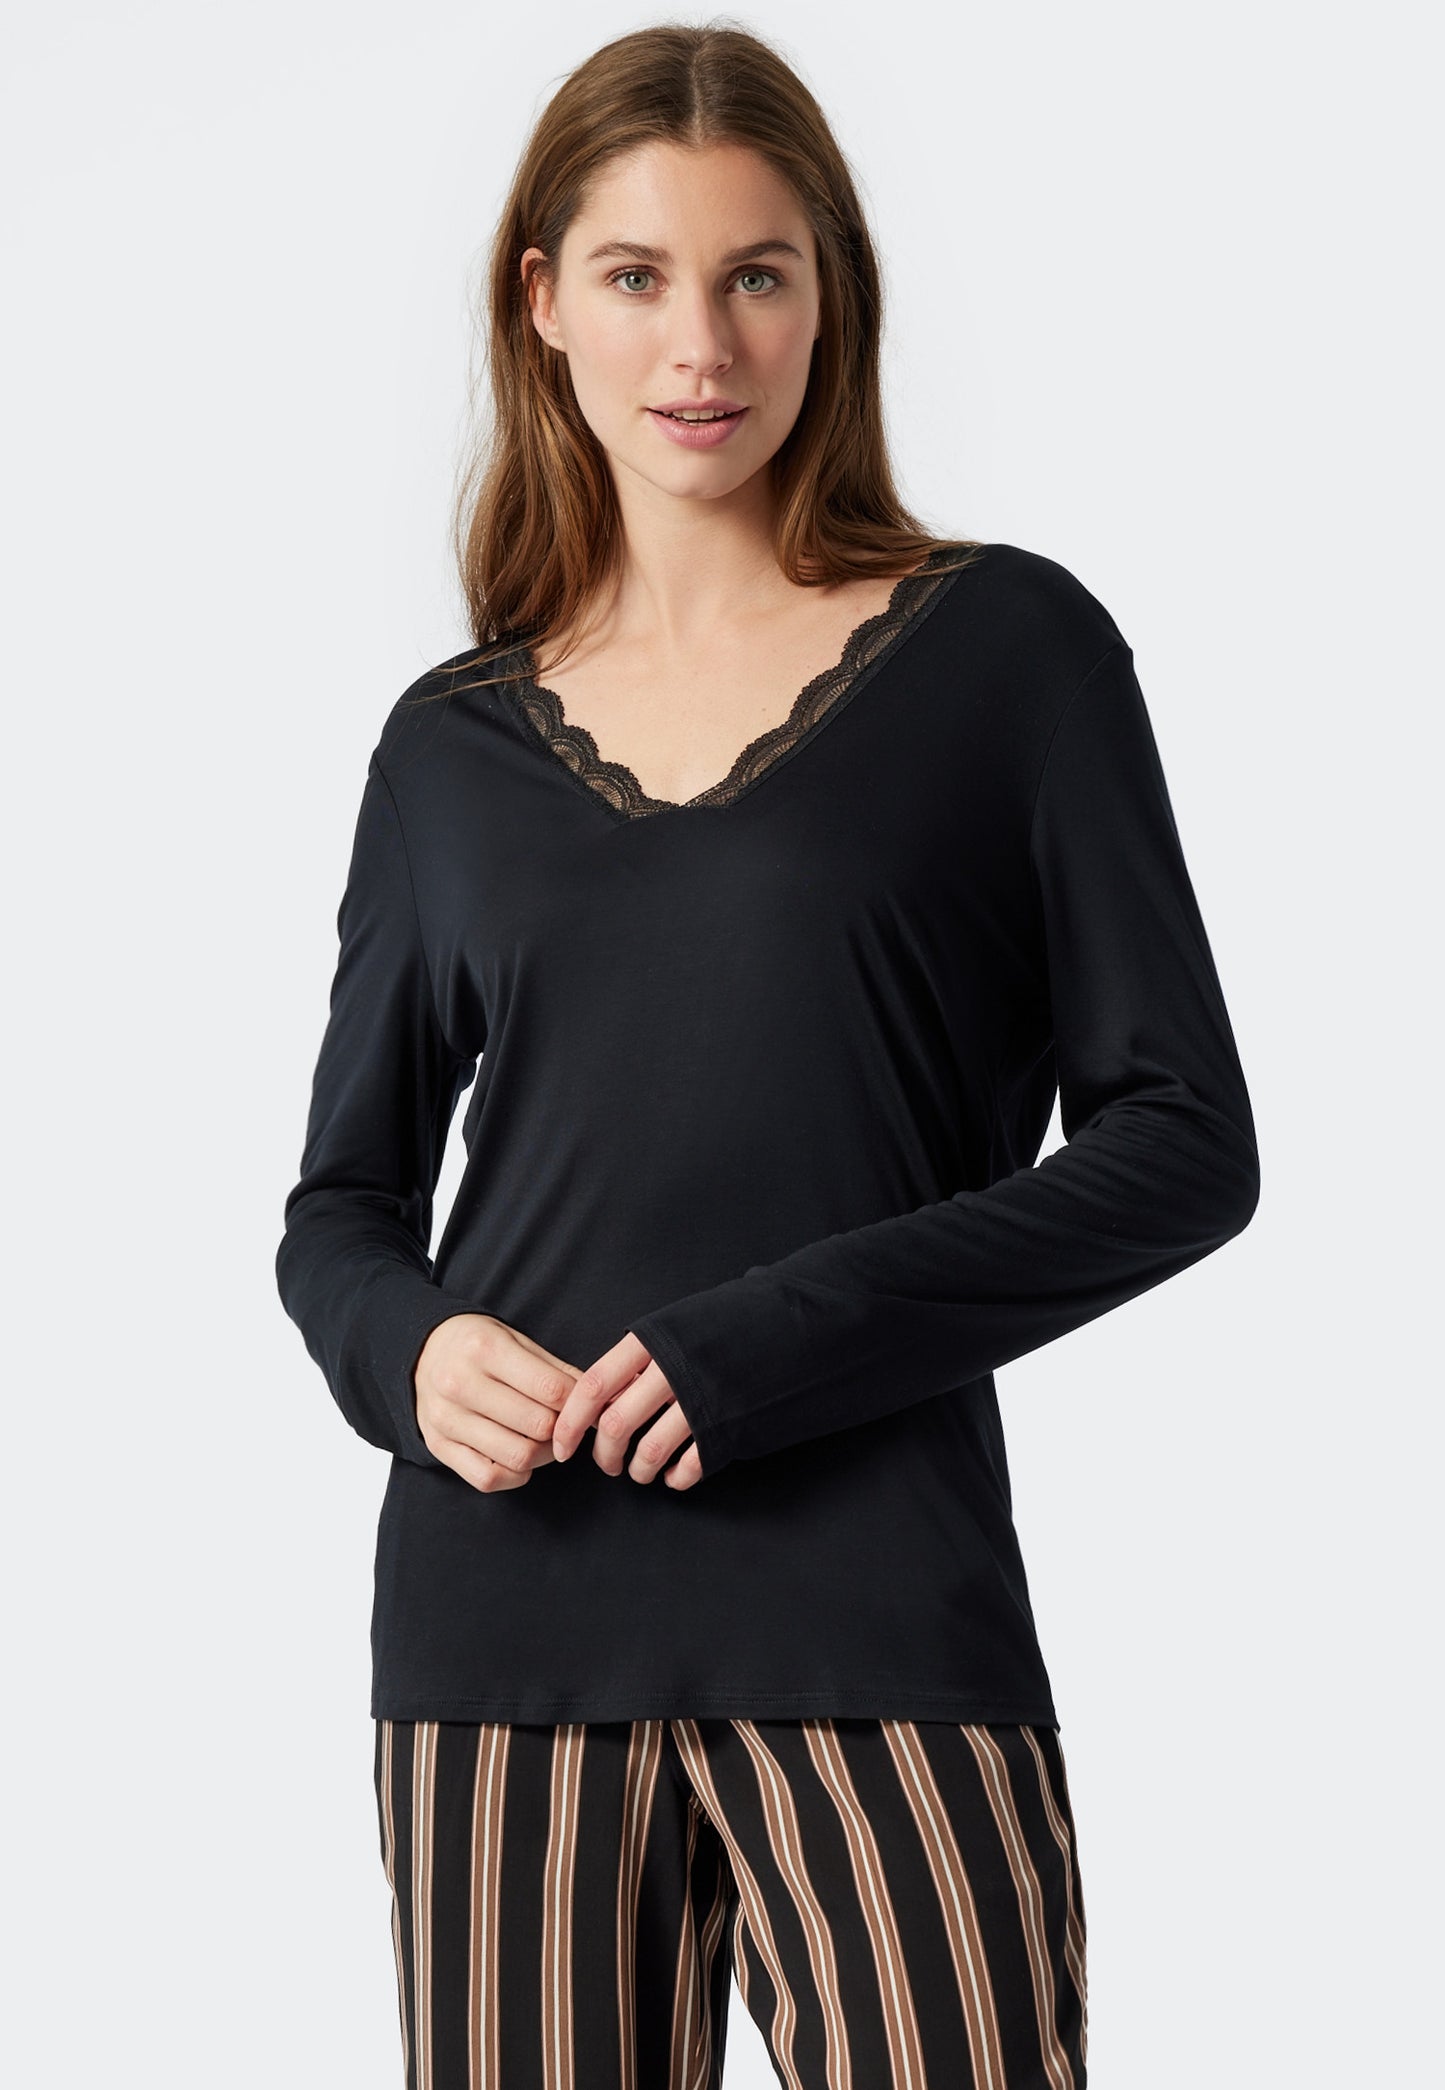 Shirt long-sleeved interlock V-neck lace black - Mix+Relax